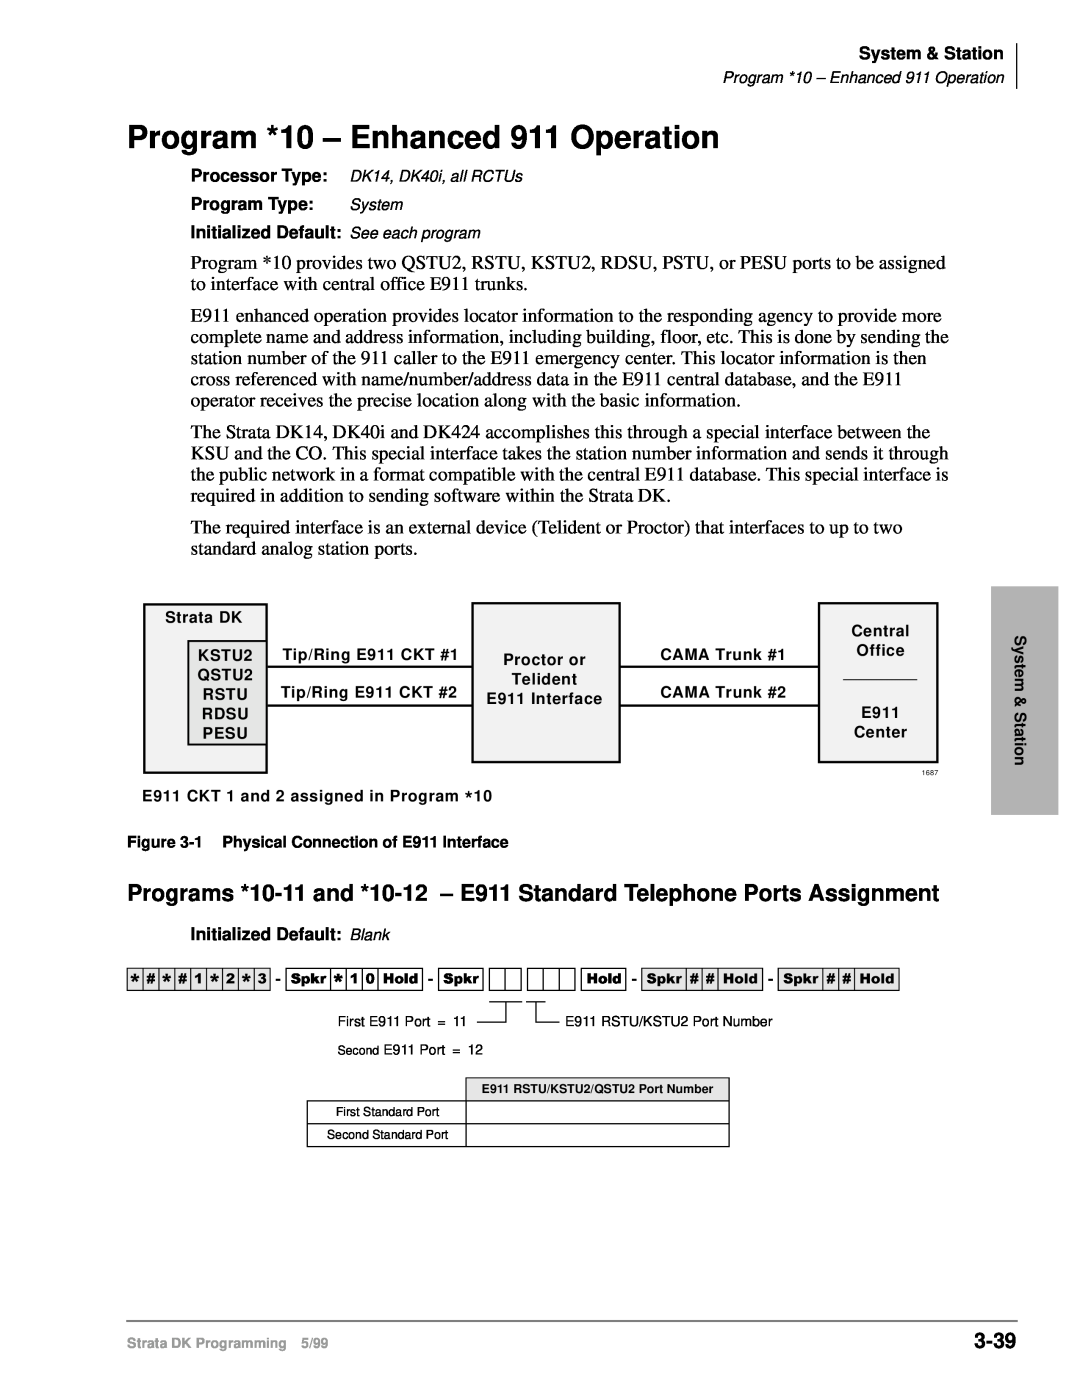 Toshiba dk14 manual Program *10 - Enhanced 911 Operation, 3-39, System & Station, Program Type: System 